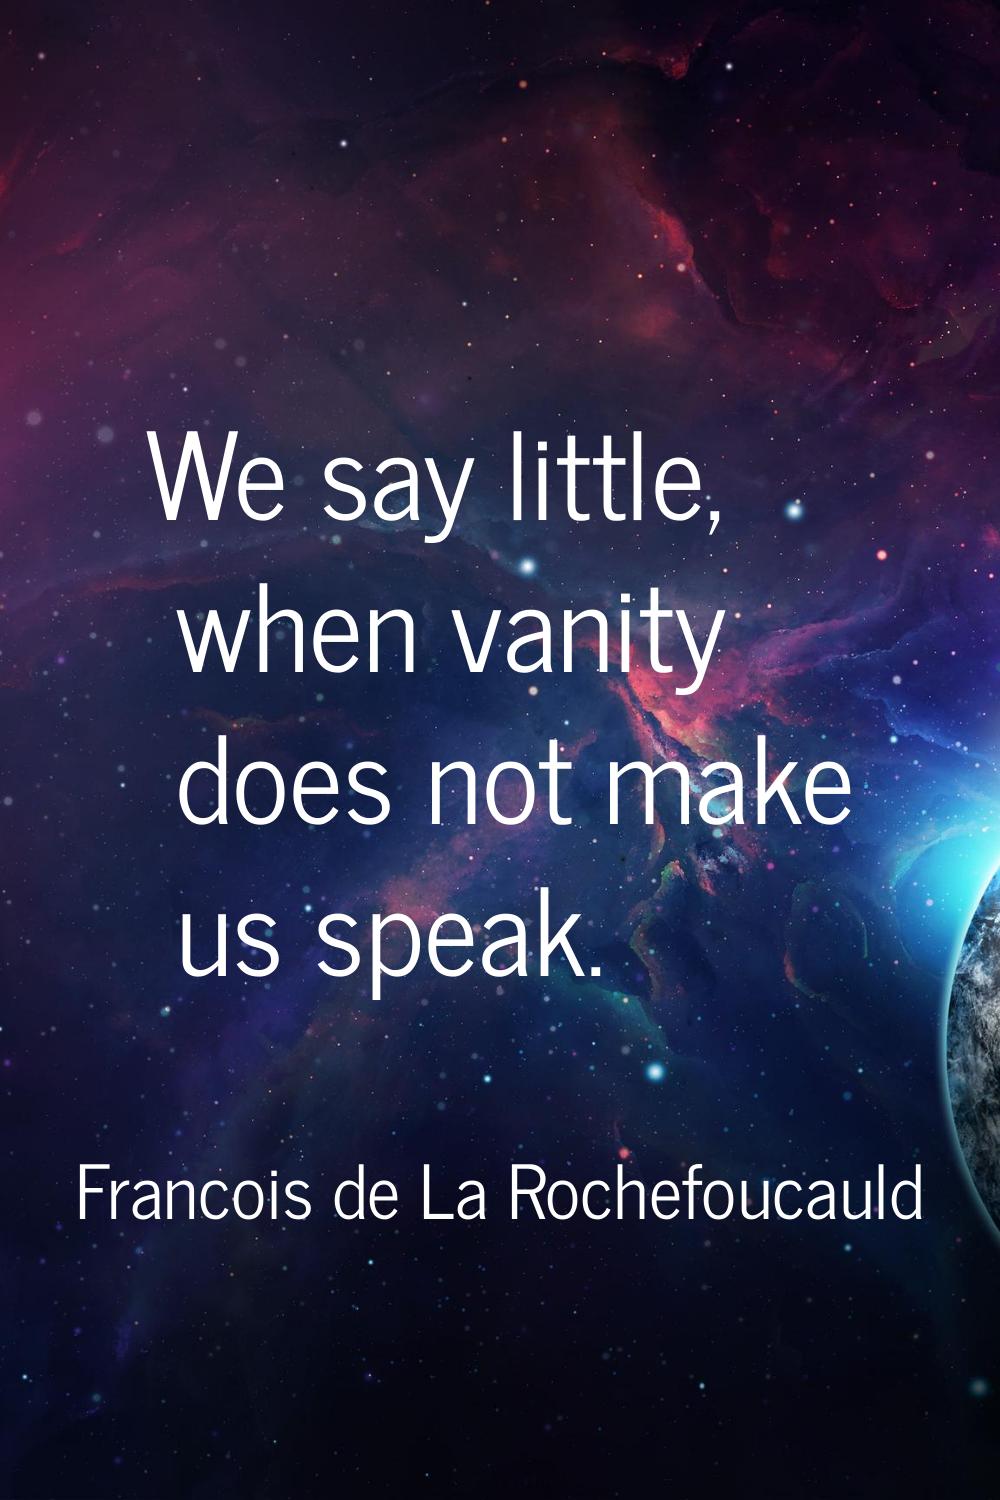 We say little, when vanity does not make us speak.